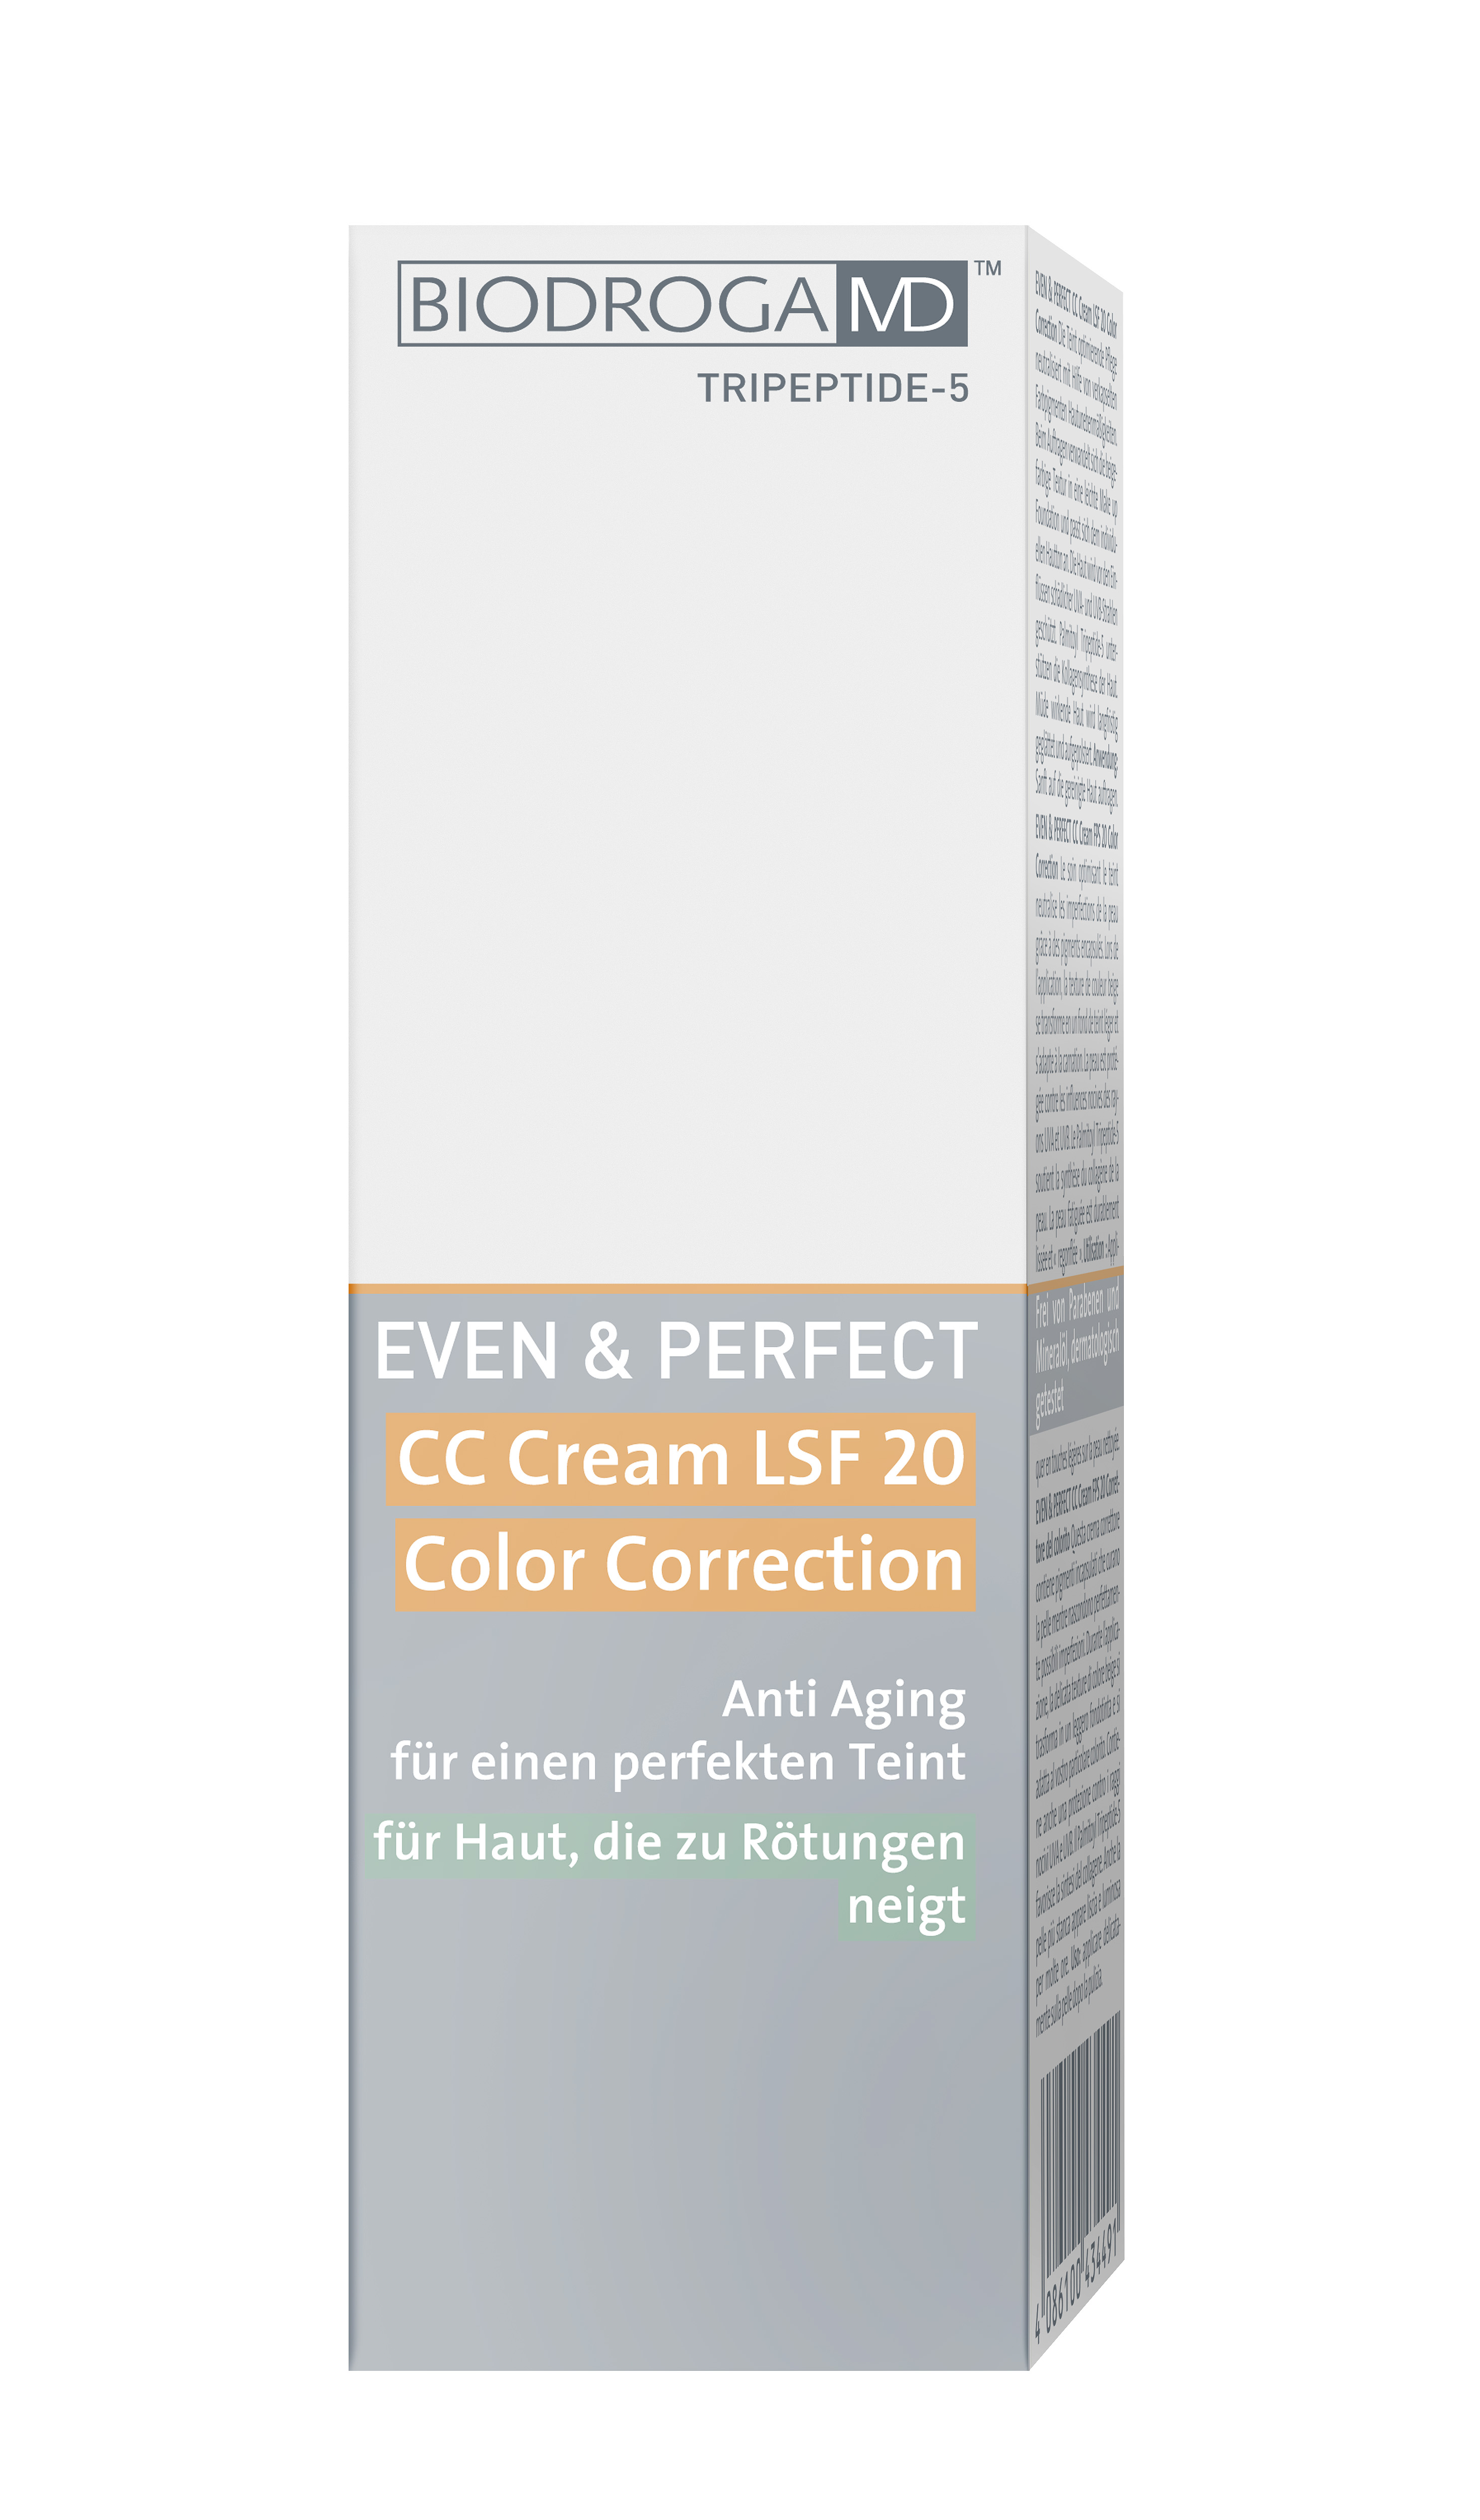 Biodroga MD Even & Perfect CC Cream SPF20 Skin Tending 40ml